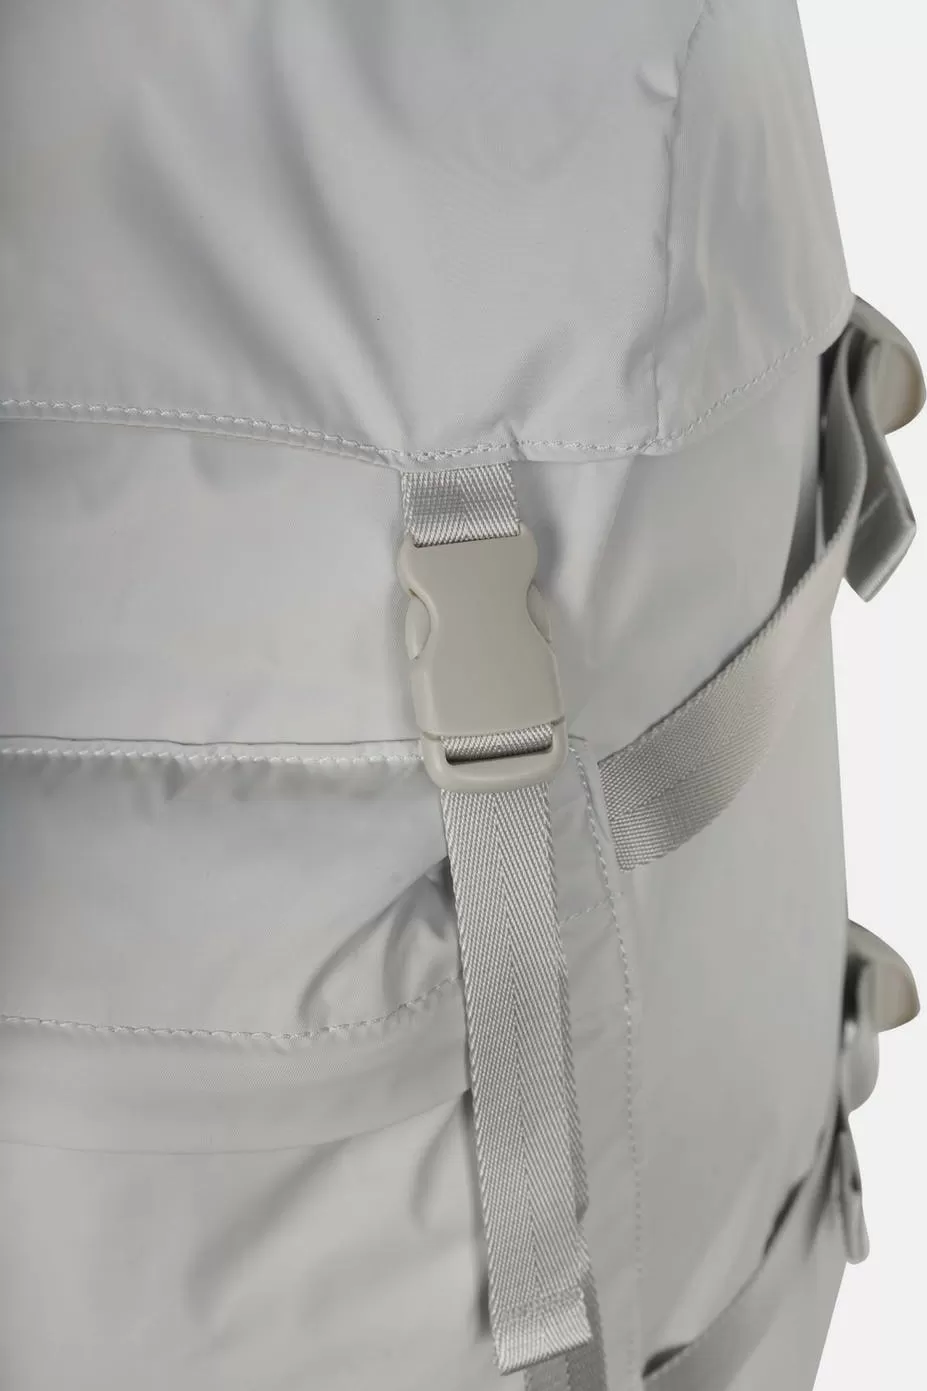 Классический рюкзак Shu светло-серый (19л)